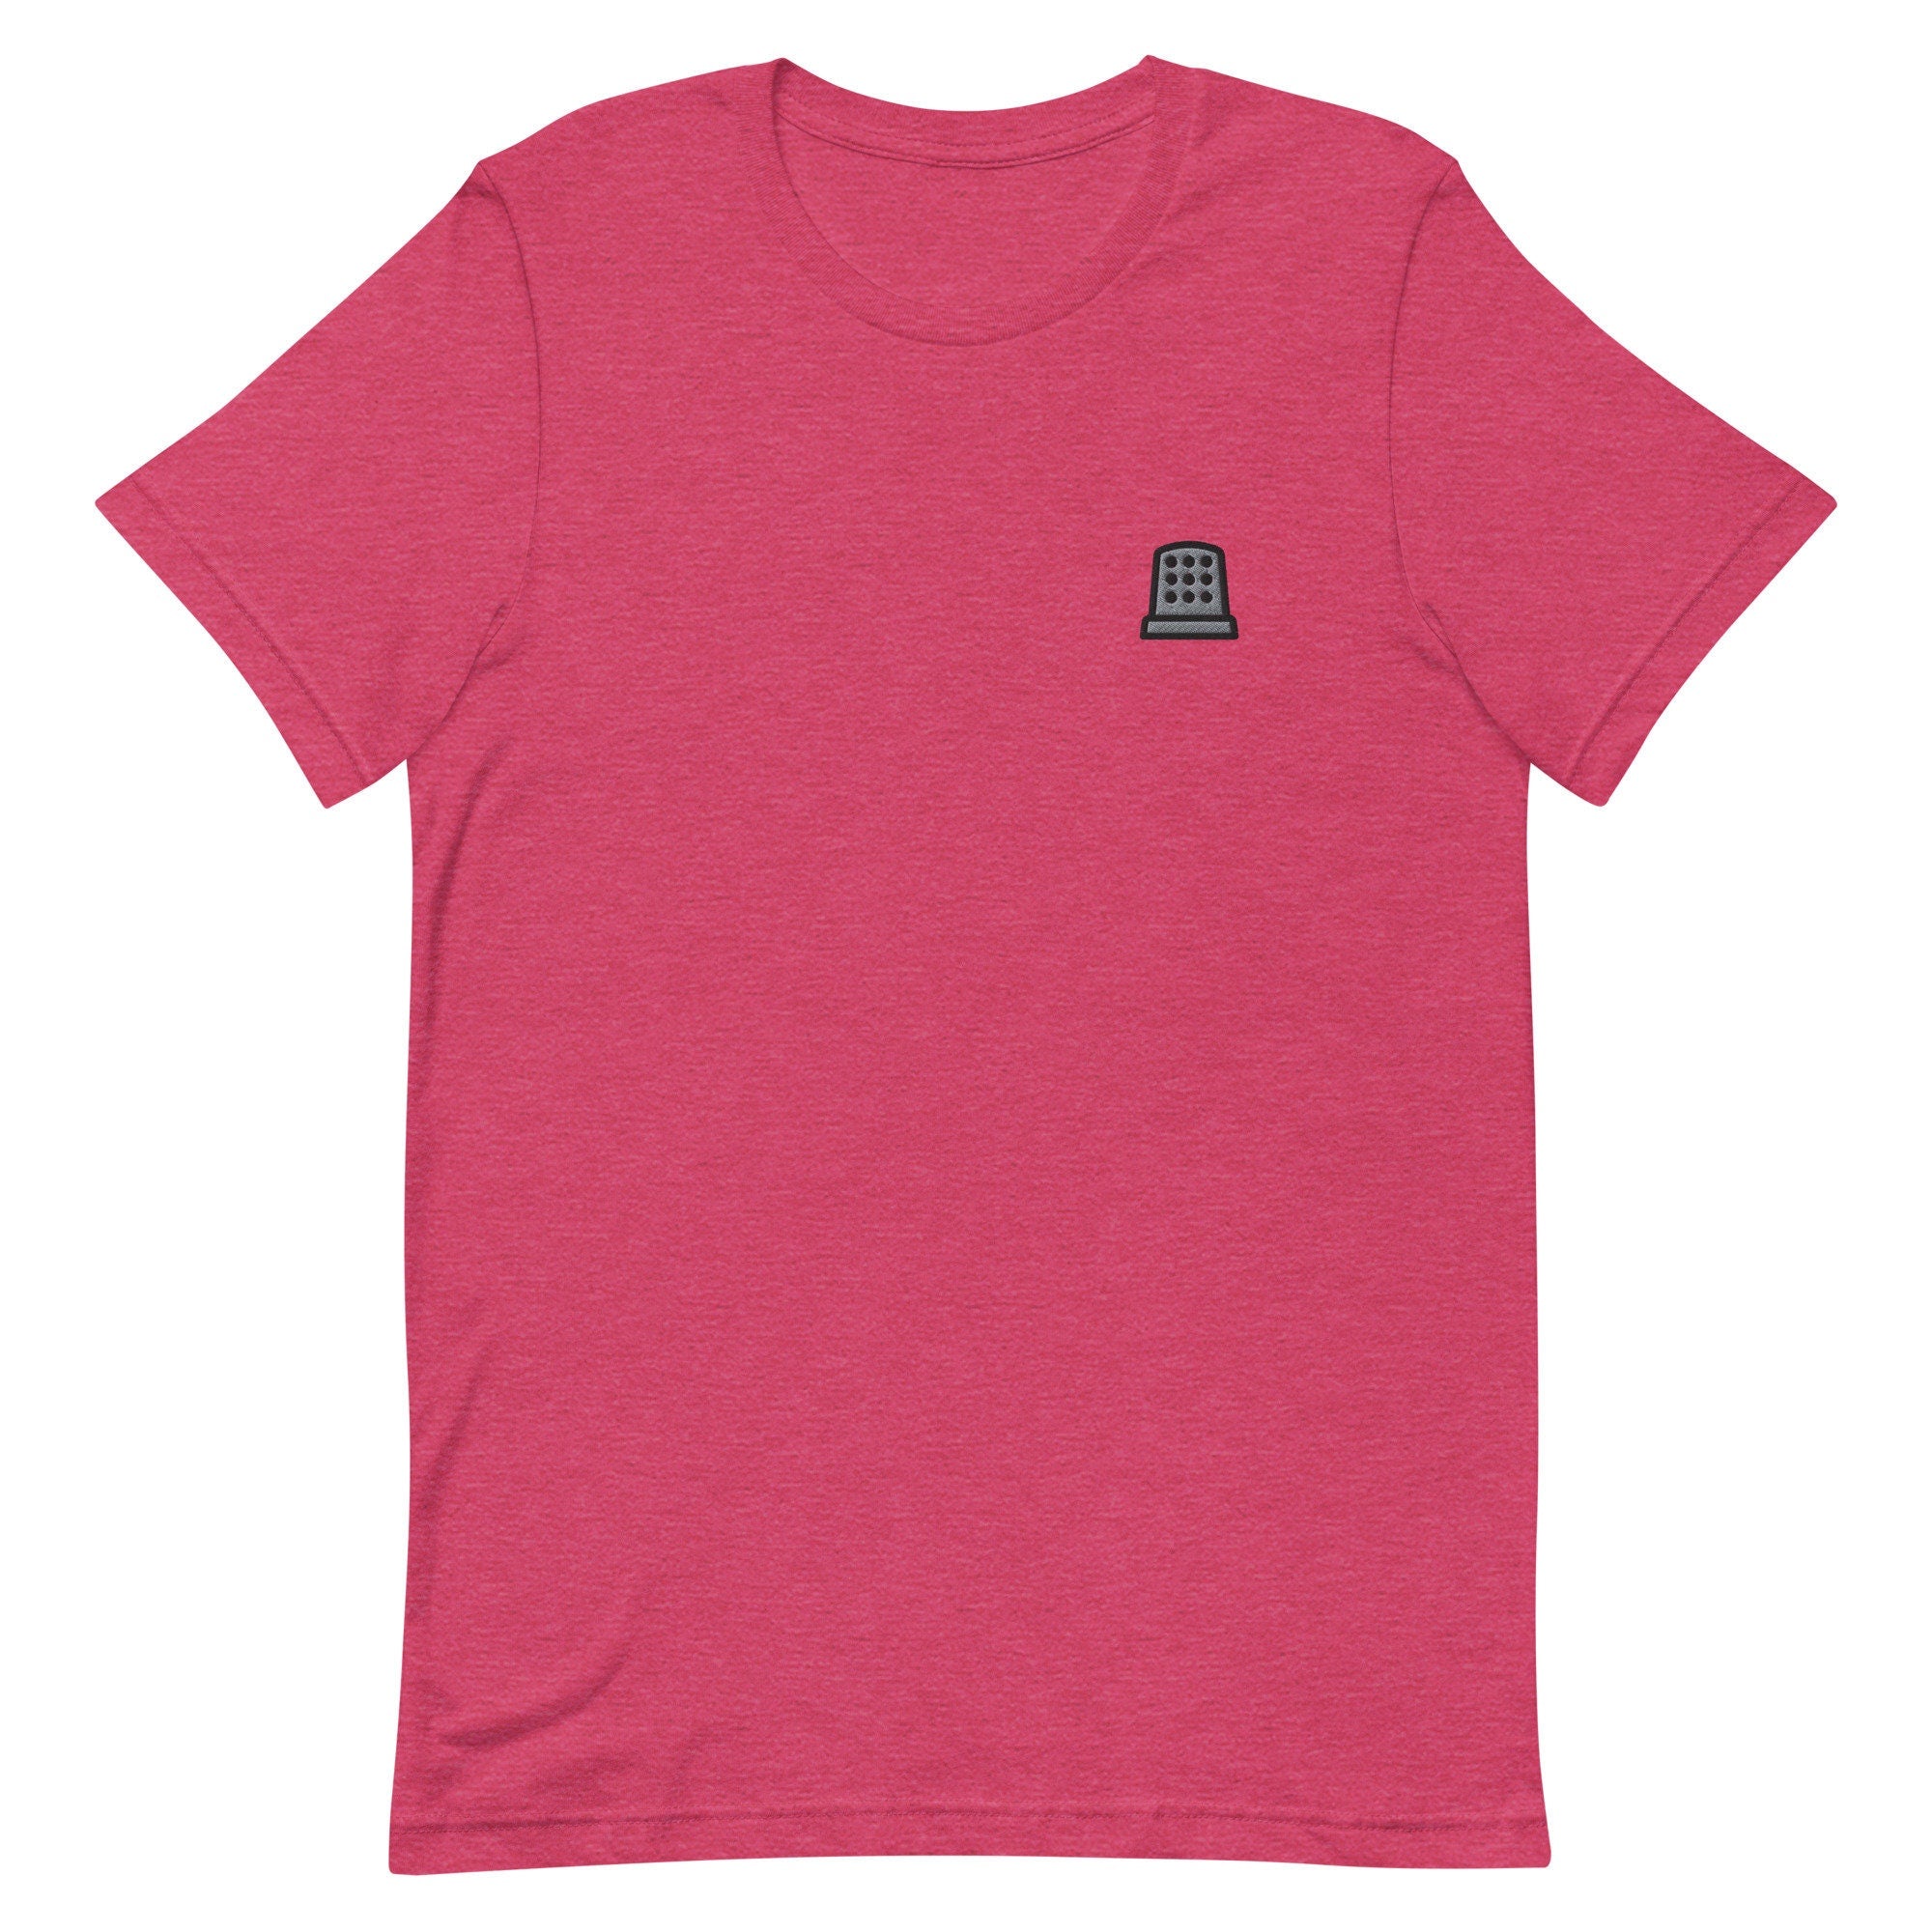 Thimble Premium Men's T-Shirt, Embroidered Men's T-Shirt Gift for Boyfriend, Men's Short Sleeve Shirt - Multiple Colors